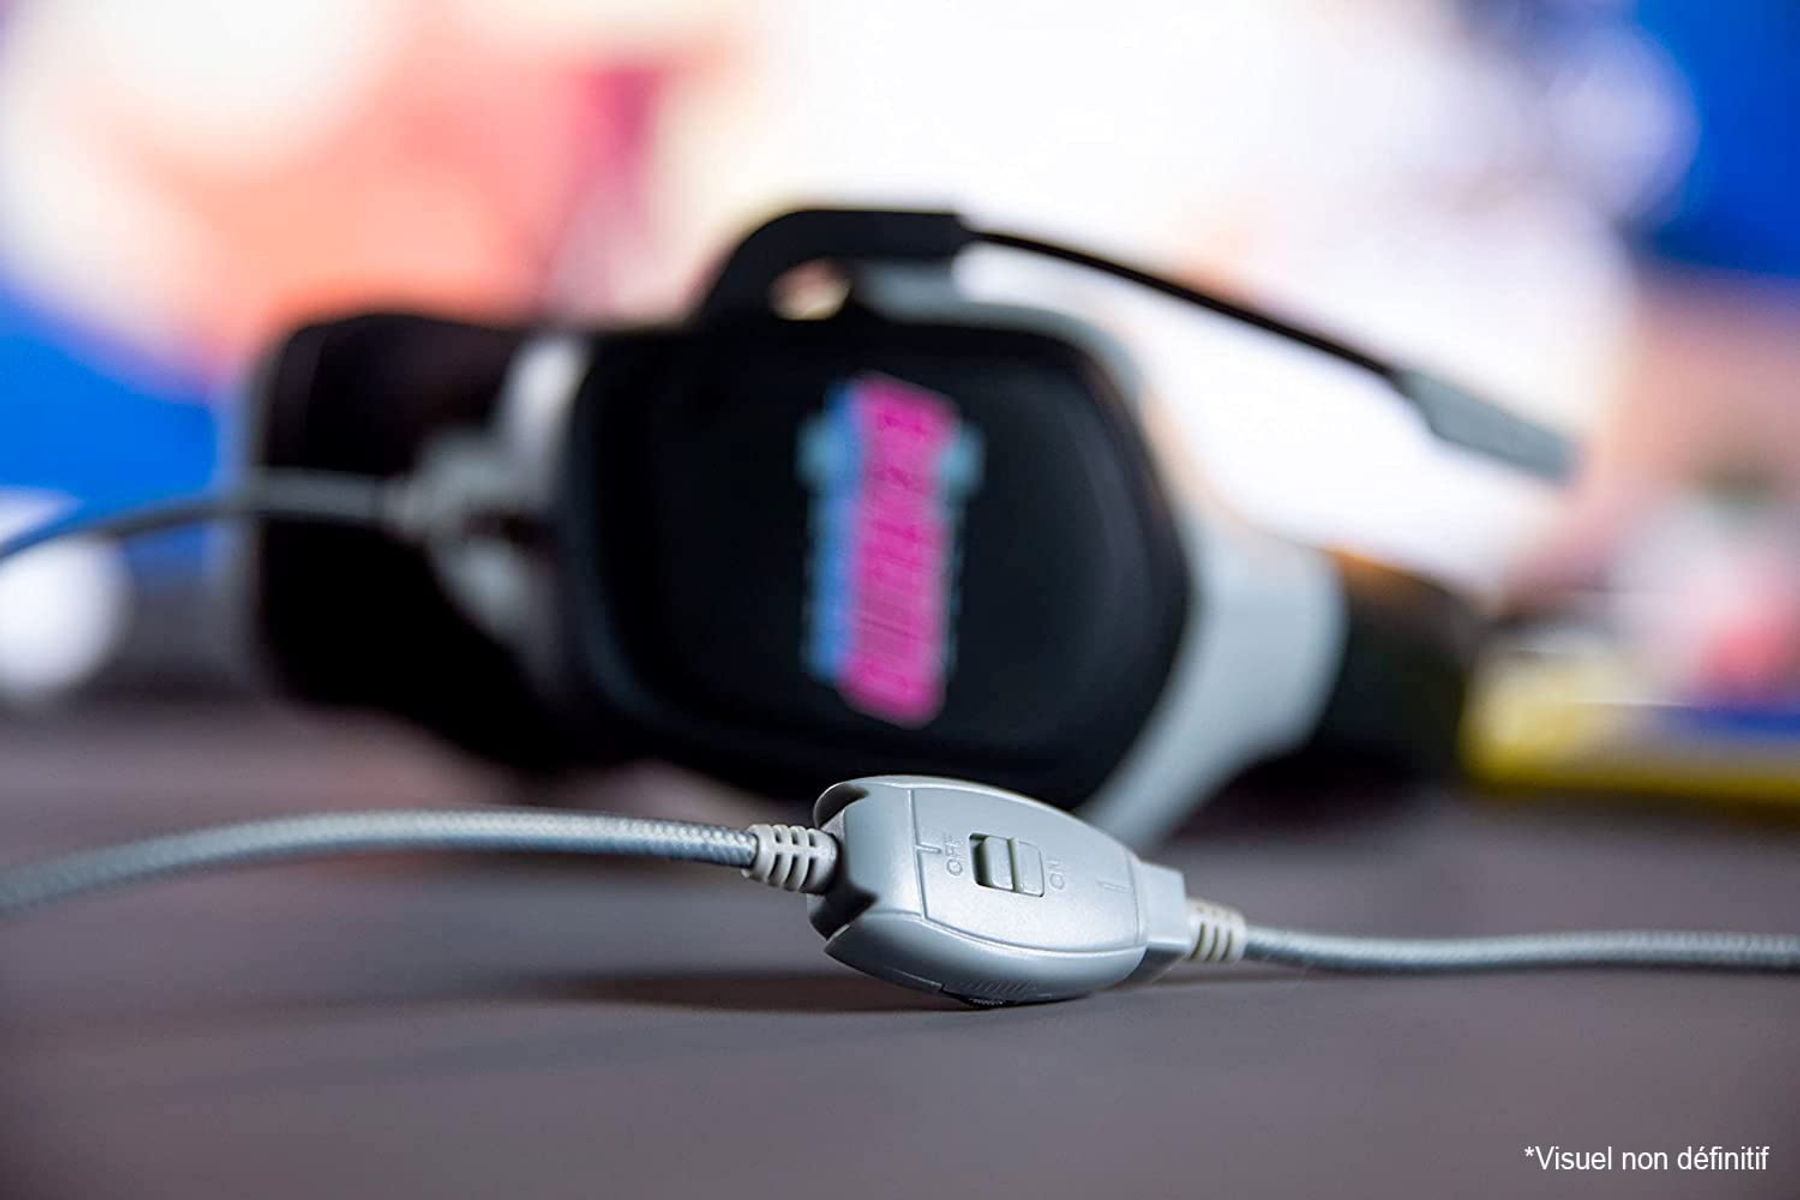 KONIX BORUTO On-ear Gaming HEADSET, GAMING Mehrfarbig Headset